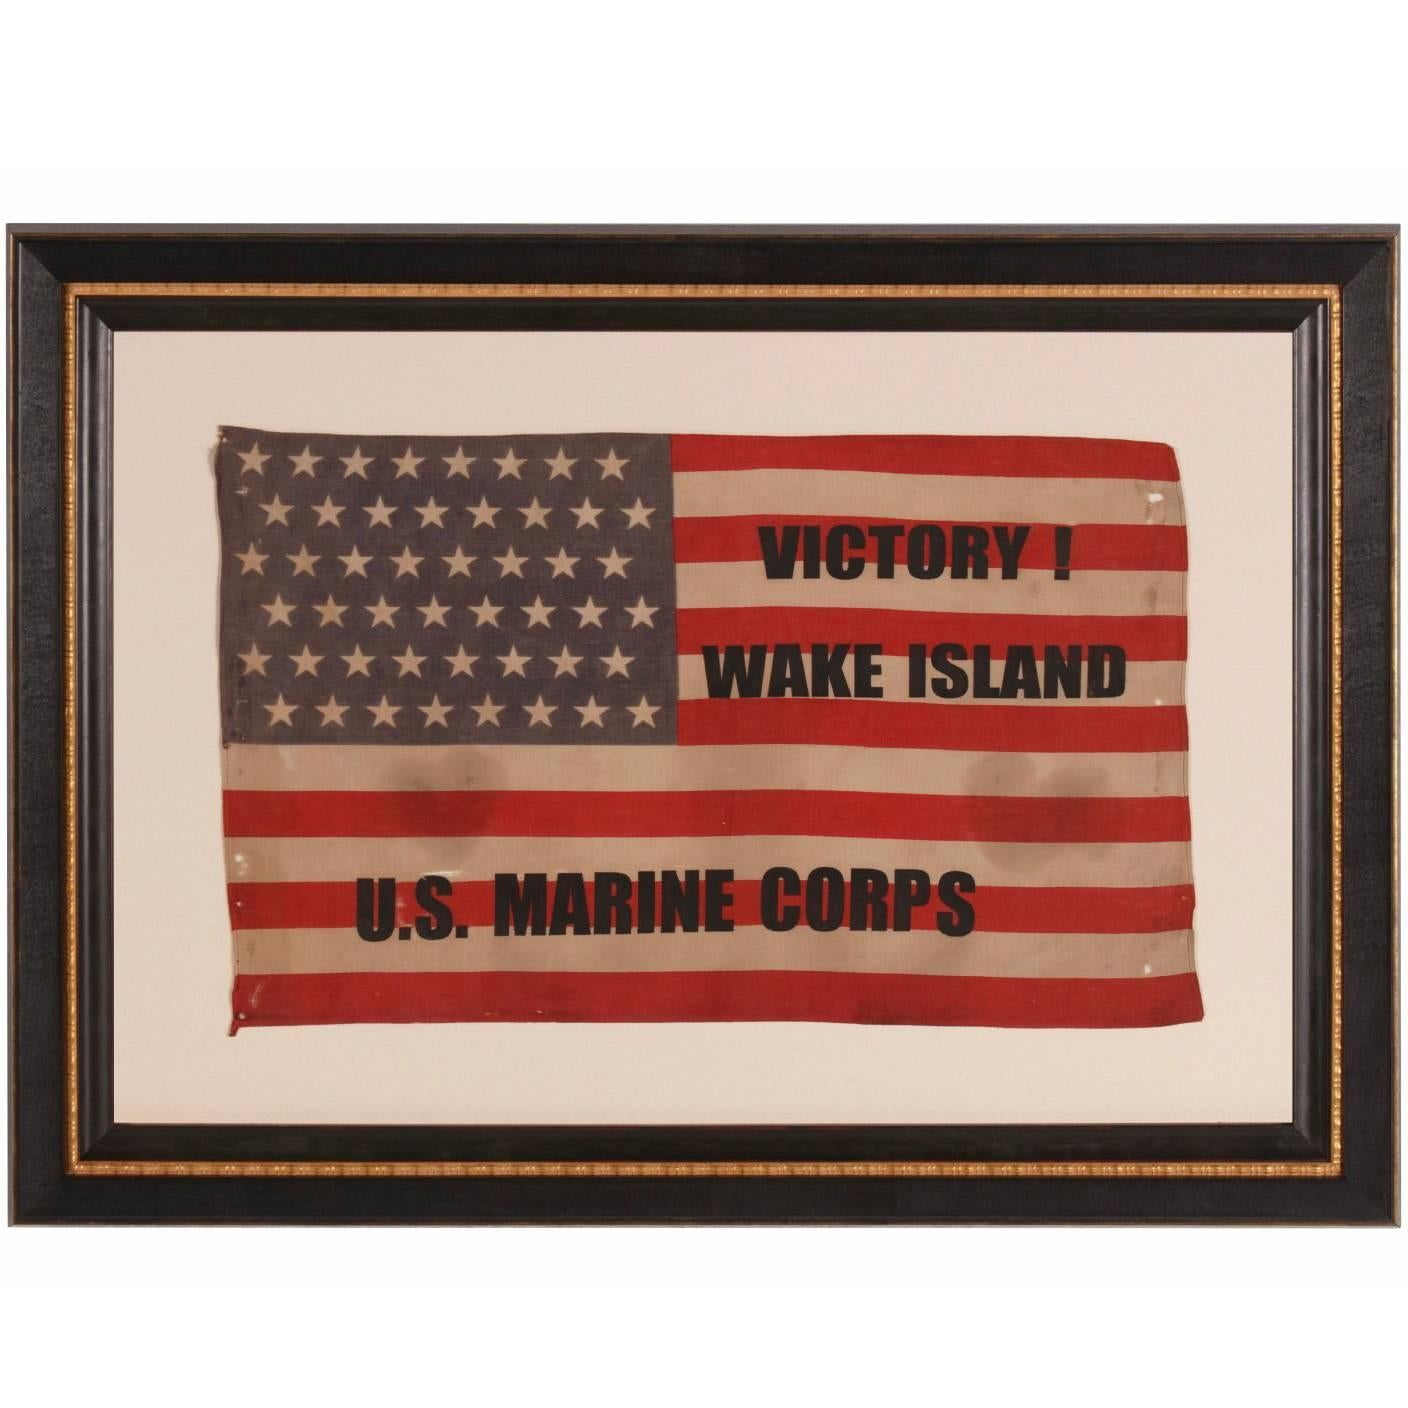 48 Star Vintage Flag w/ WWII, Wake Island, U.S. Marine Corps Overprint, 1941